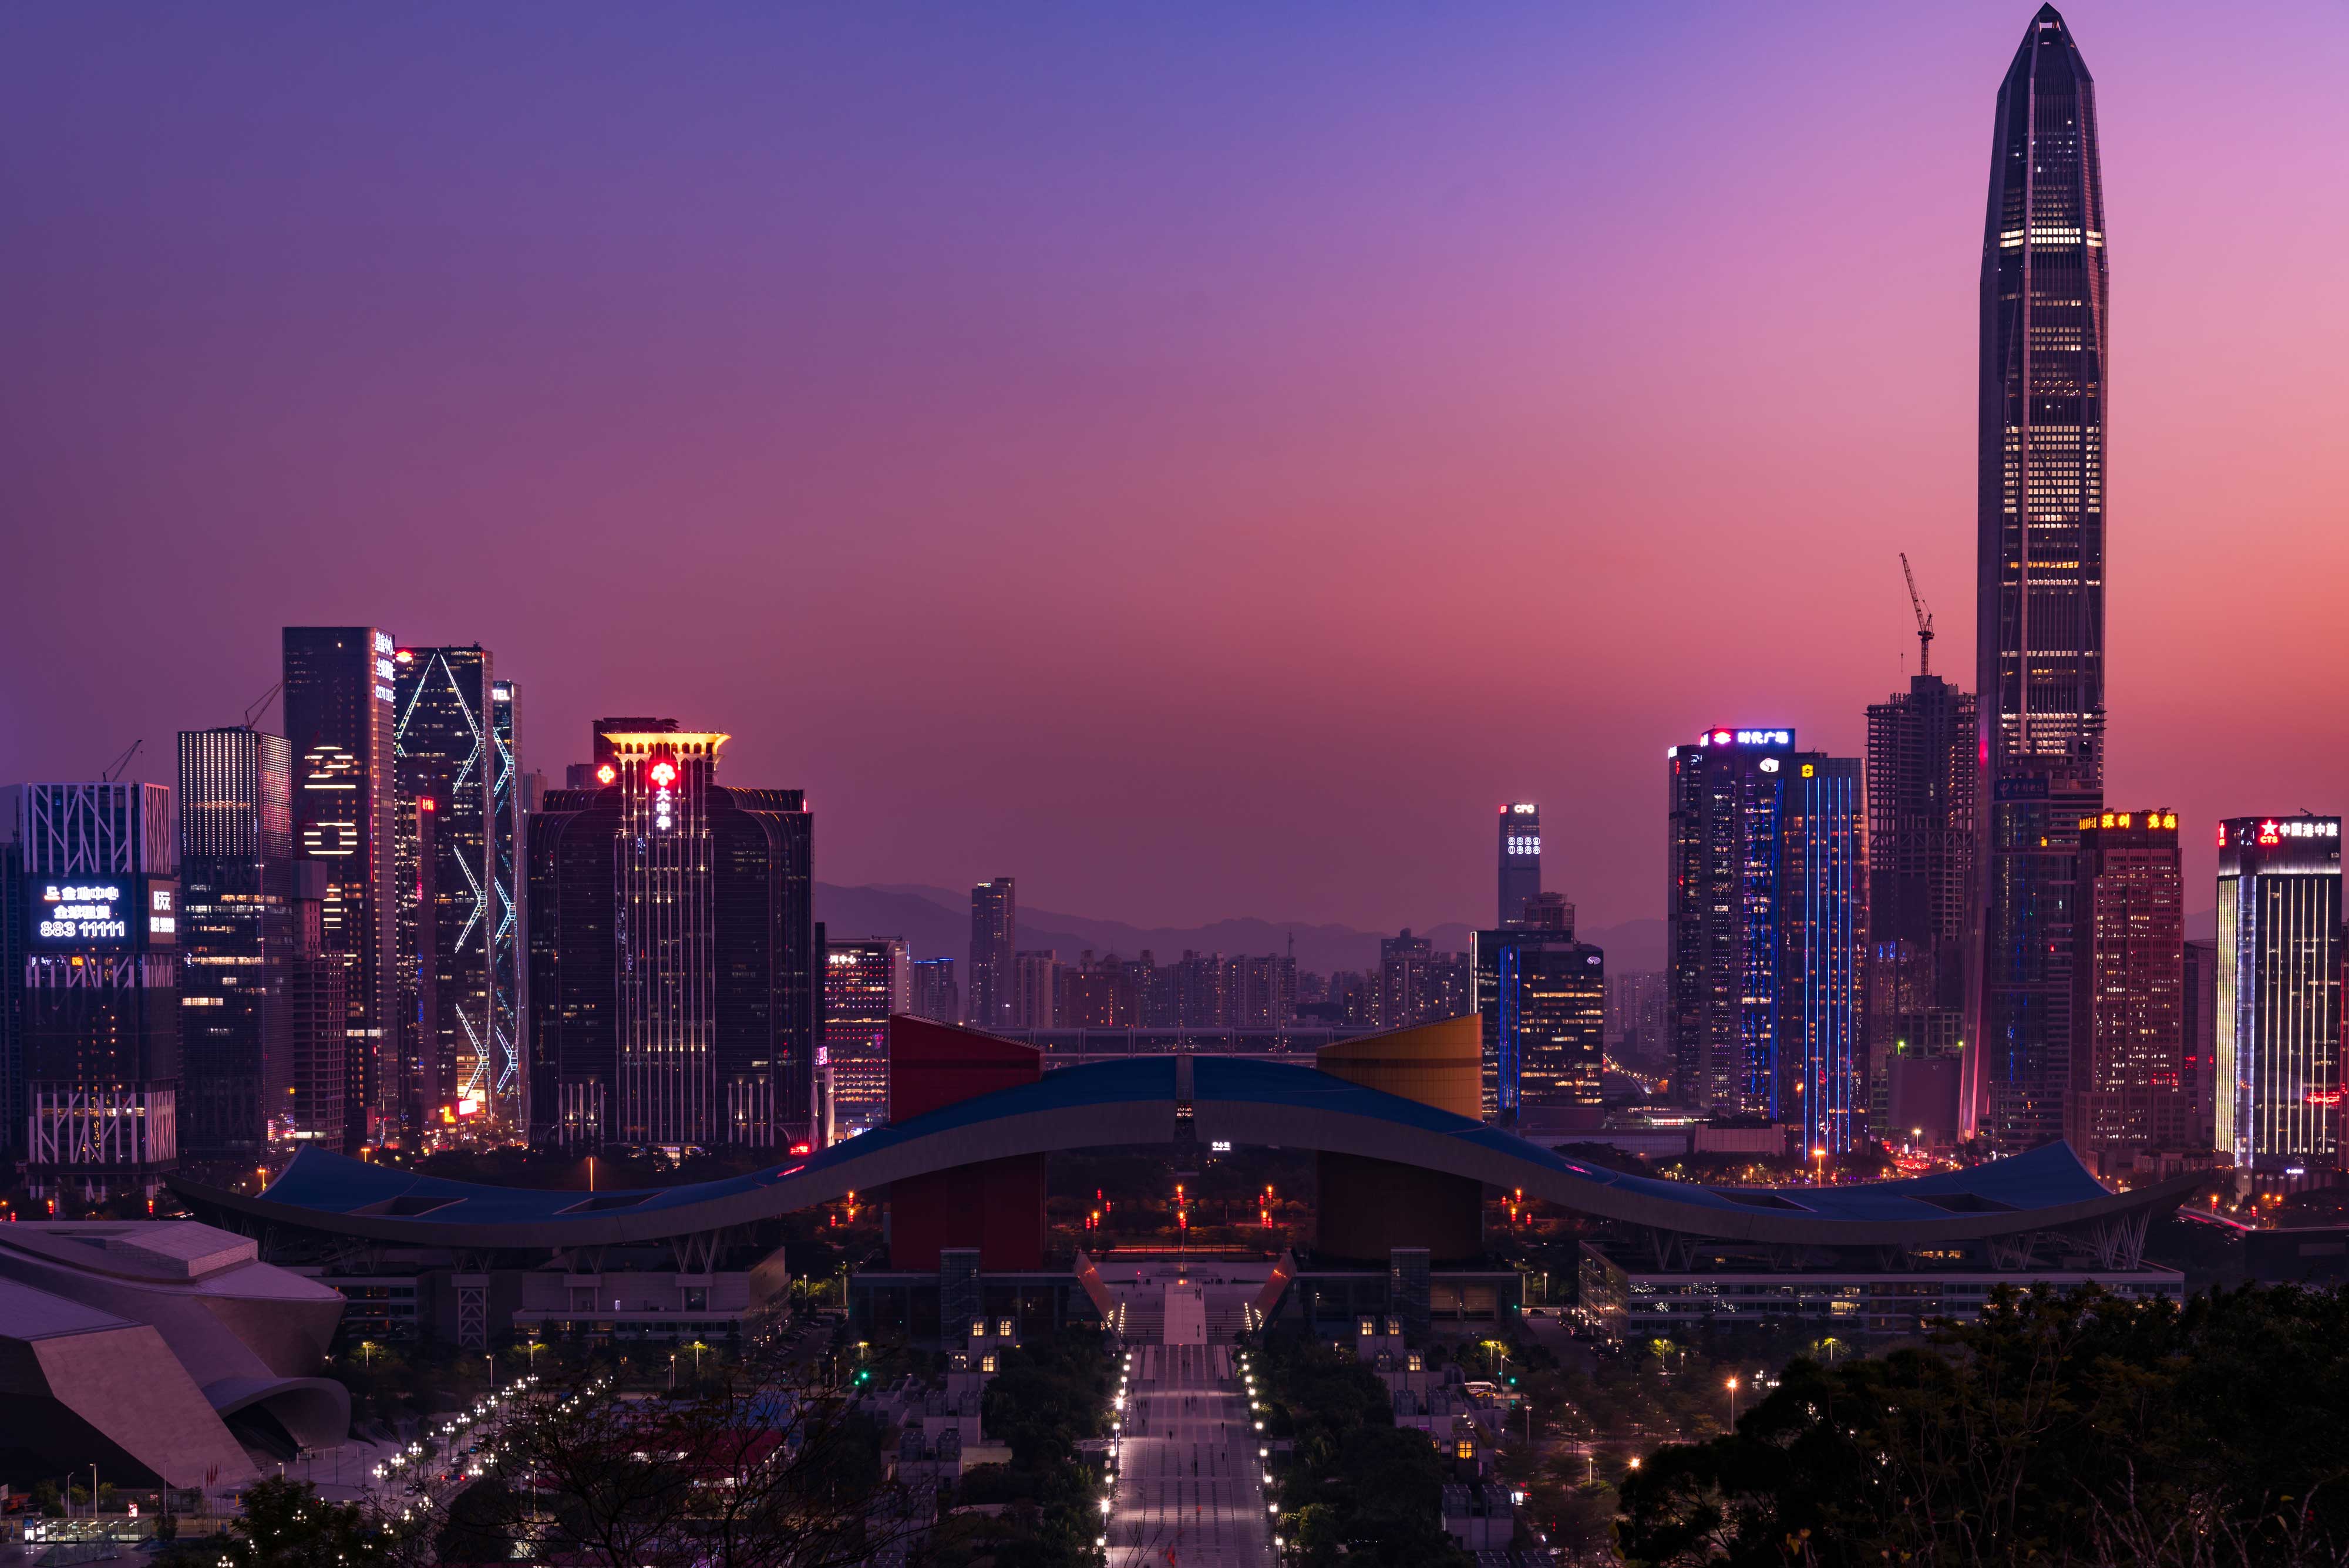 『Ever-Changing City “Shenzhen”』